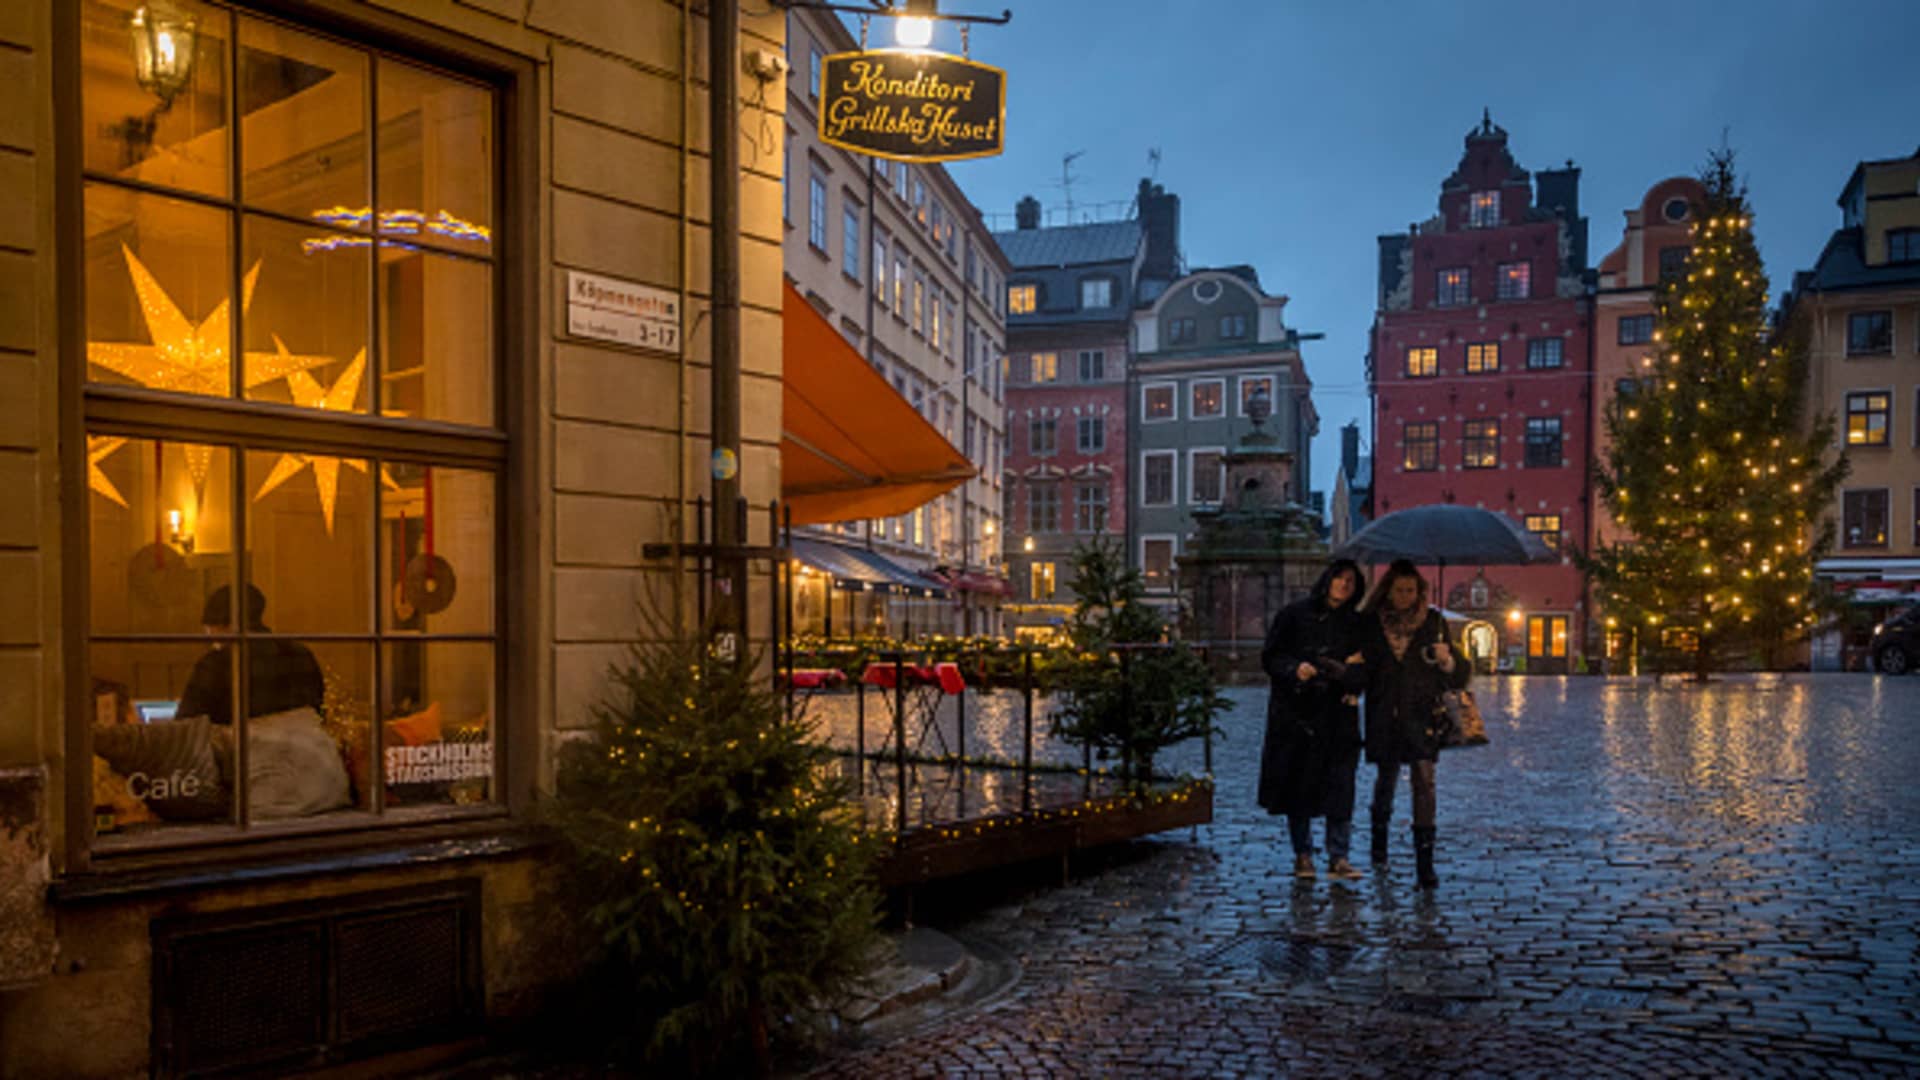 The Old Town of Stockholm, Sweden on Dec. 4, 2020.